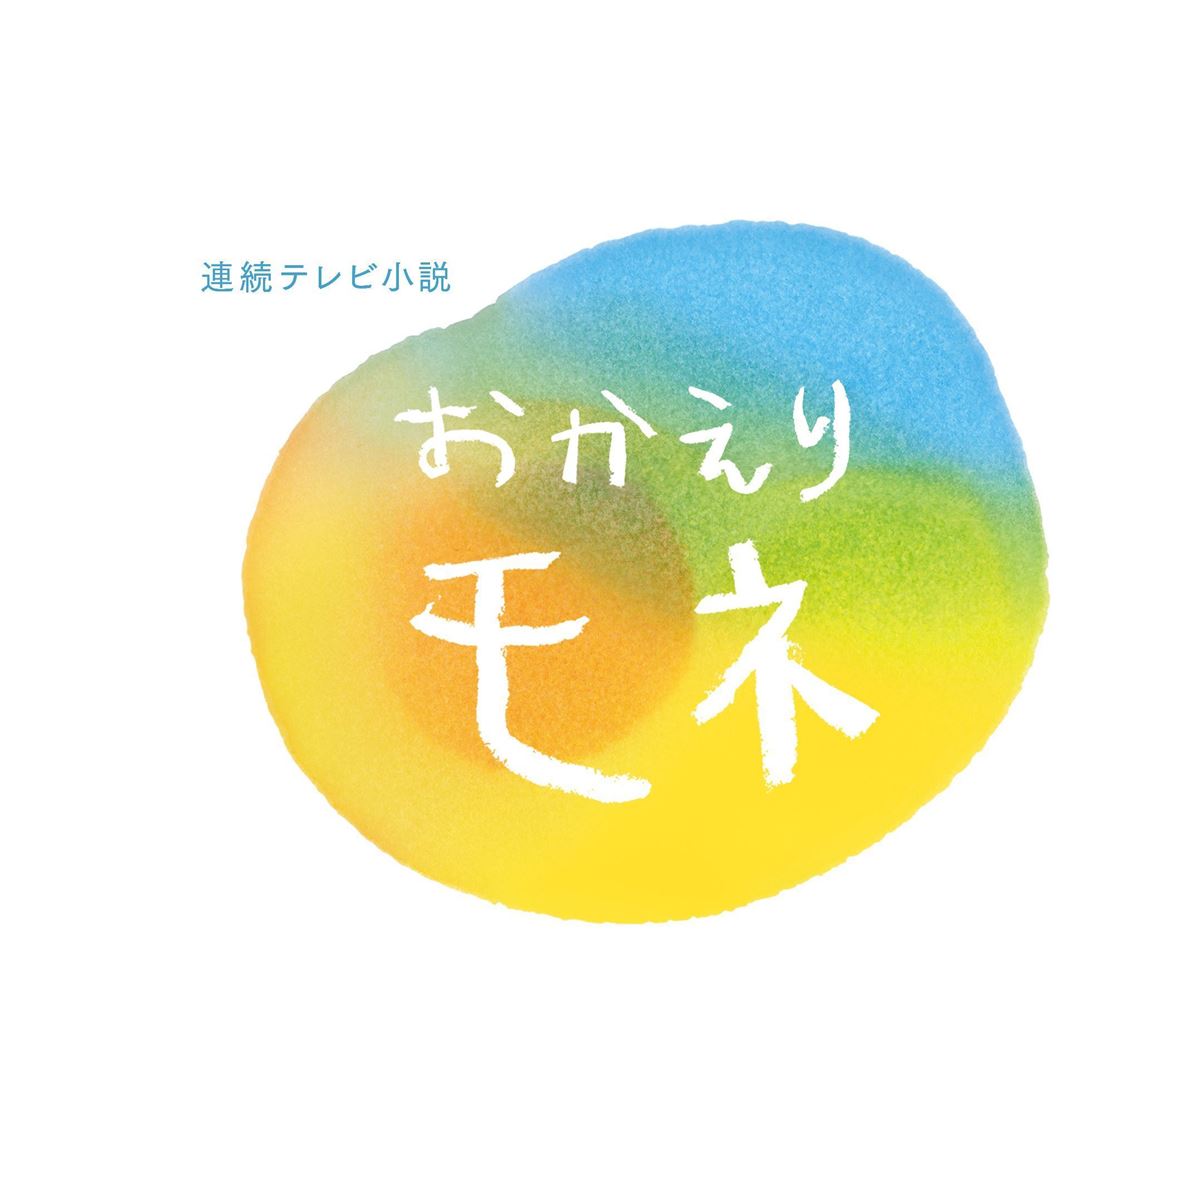 NHK連続テレビ小説『おかえりモネ』ロゴ